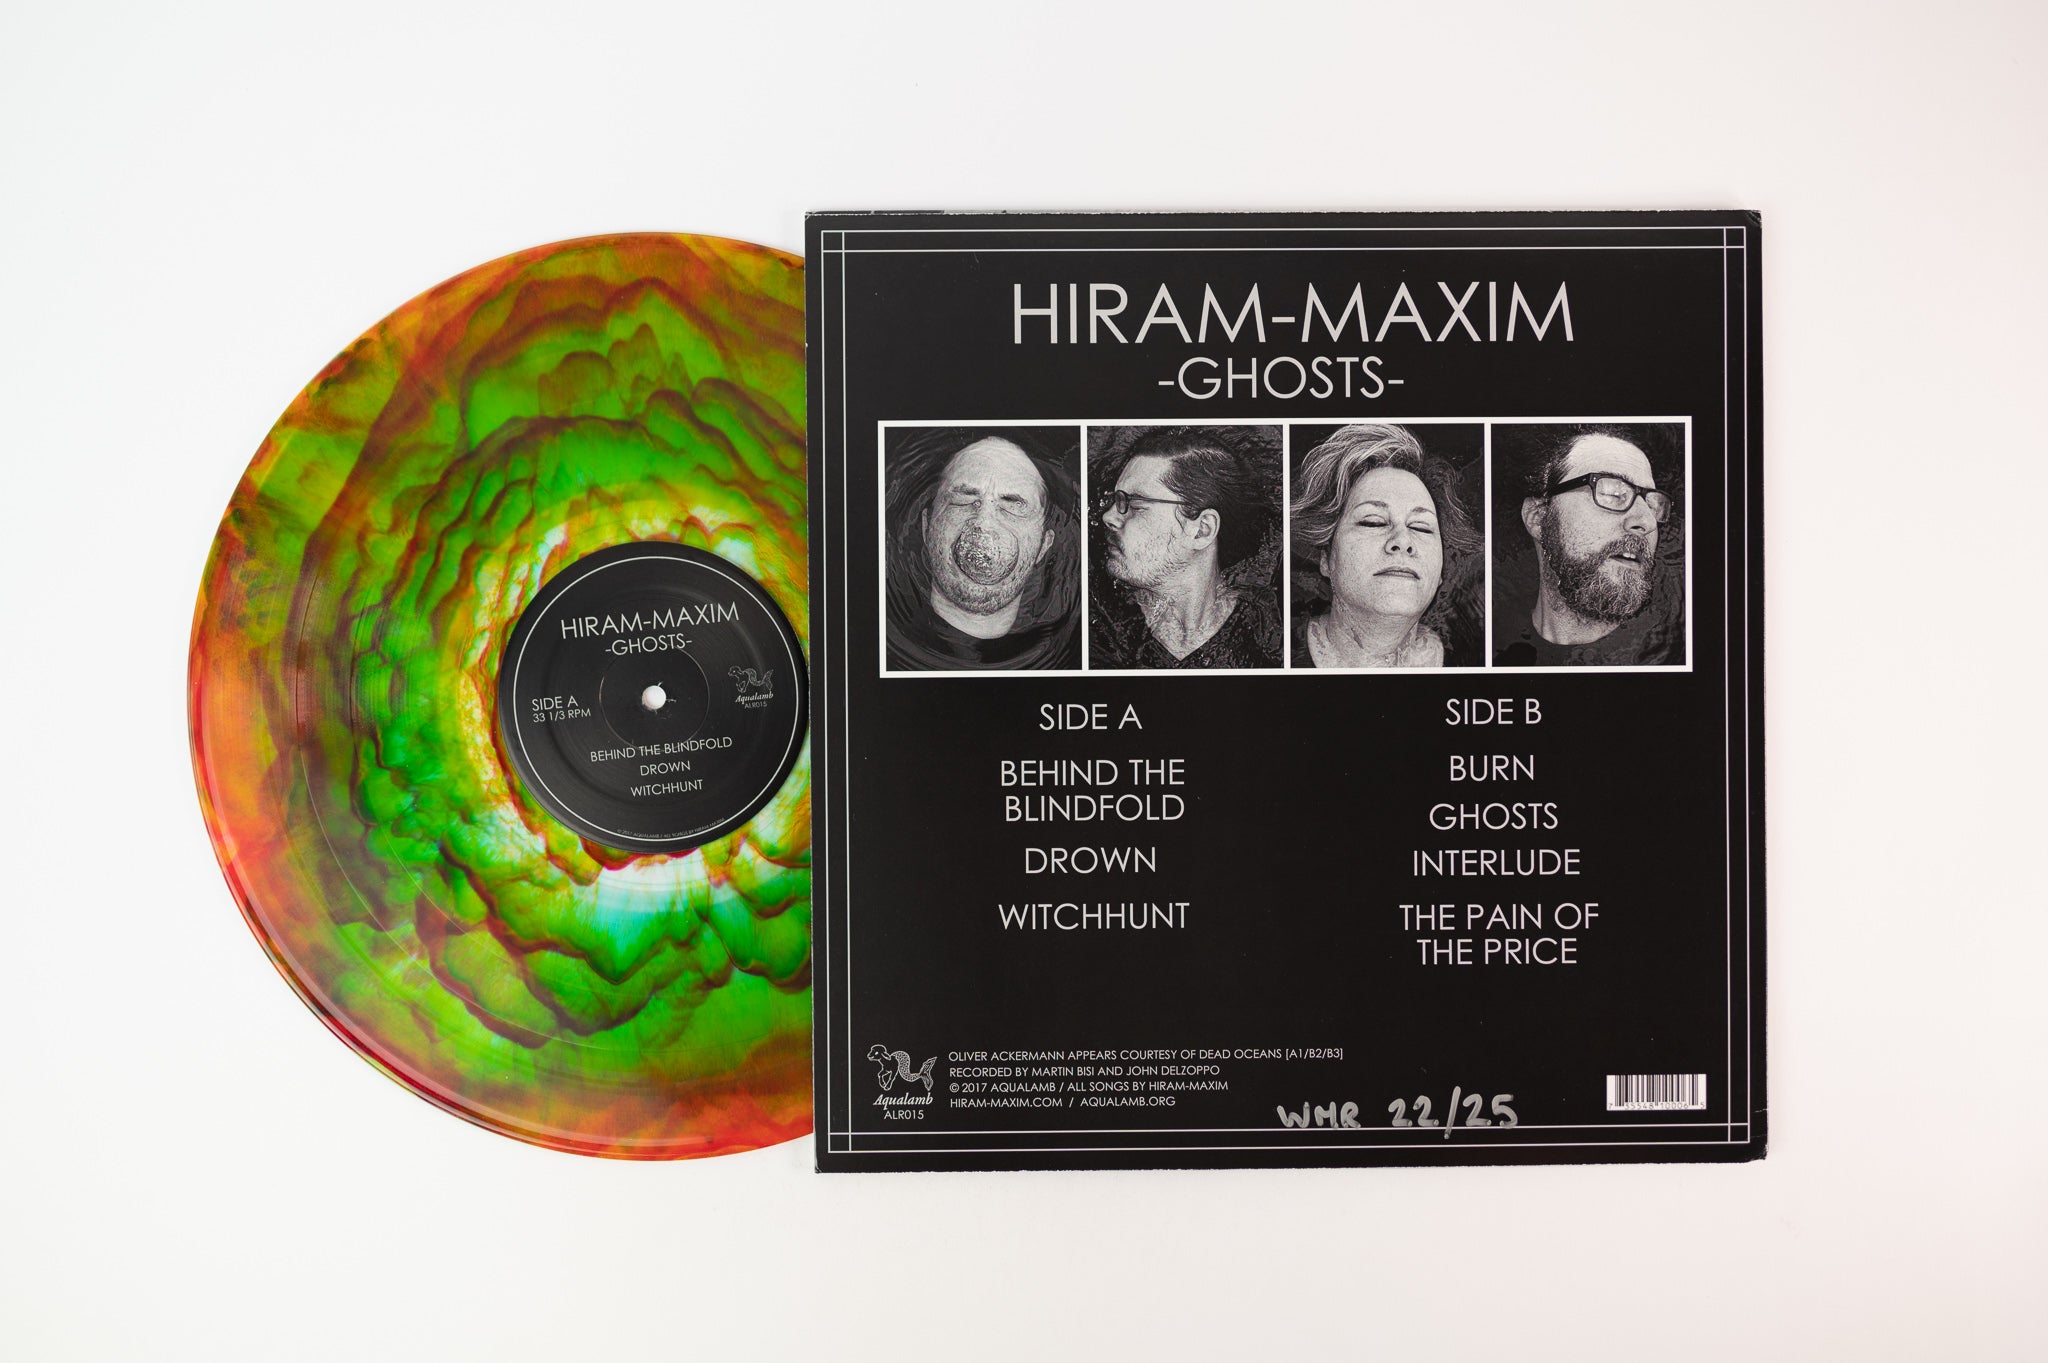 HIRAM-MAXIM - Ghosts on Aqualamb Limited Numbered Wax Mage Variant